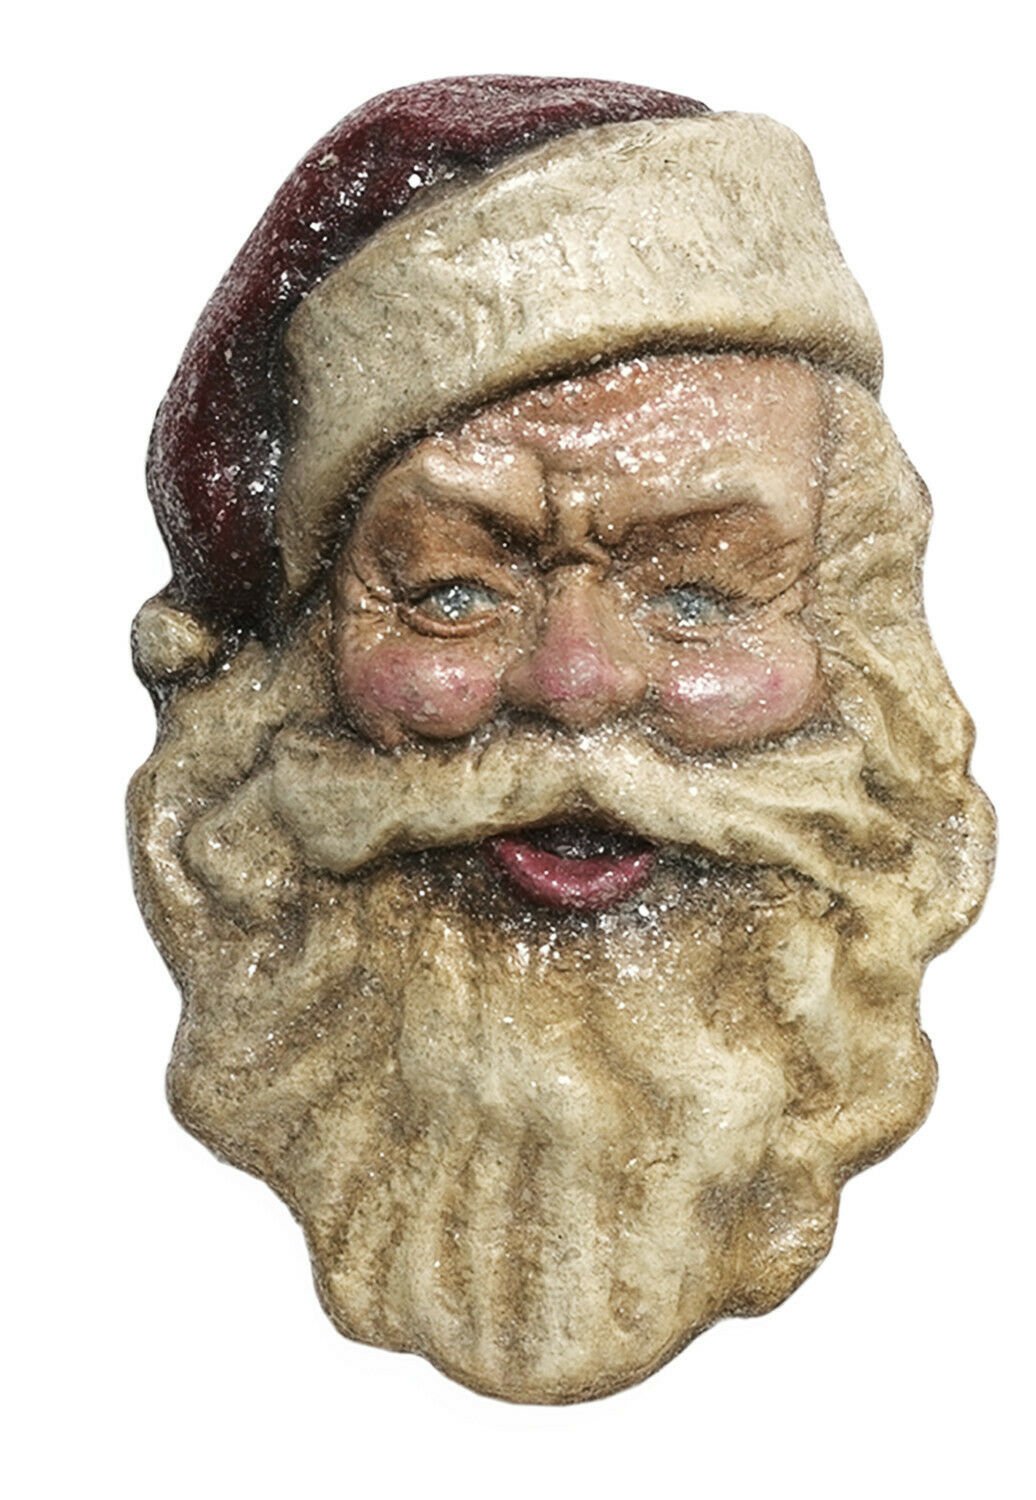 Primitive Vintage Look 17&quot; Hanging Santa Face Hanging Retro St Nick - The Primitive Pineapple Collection